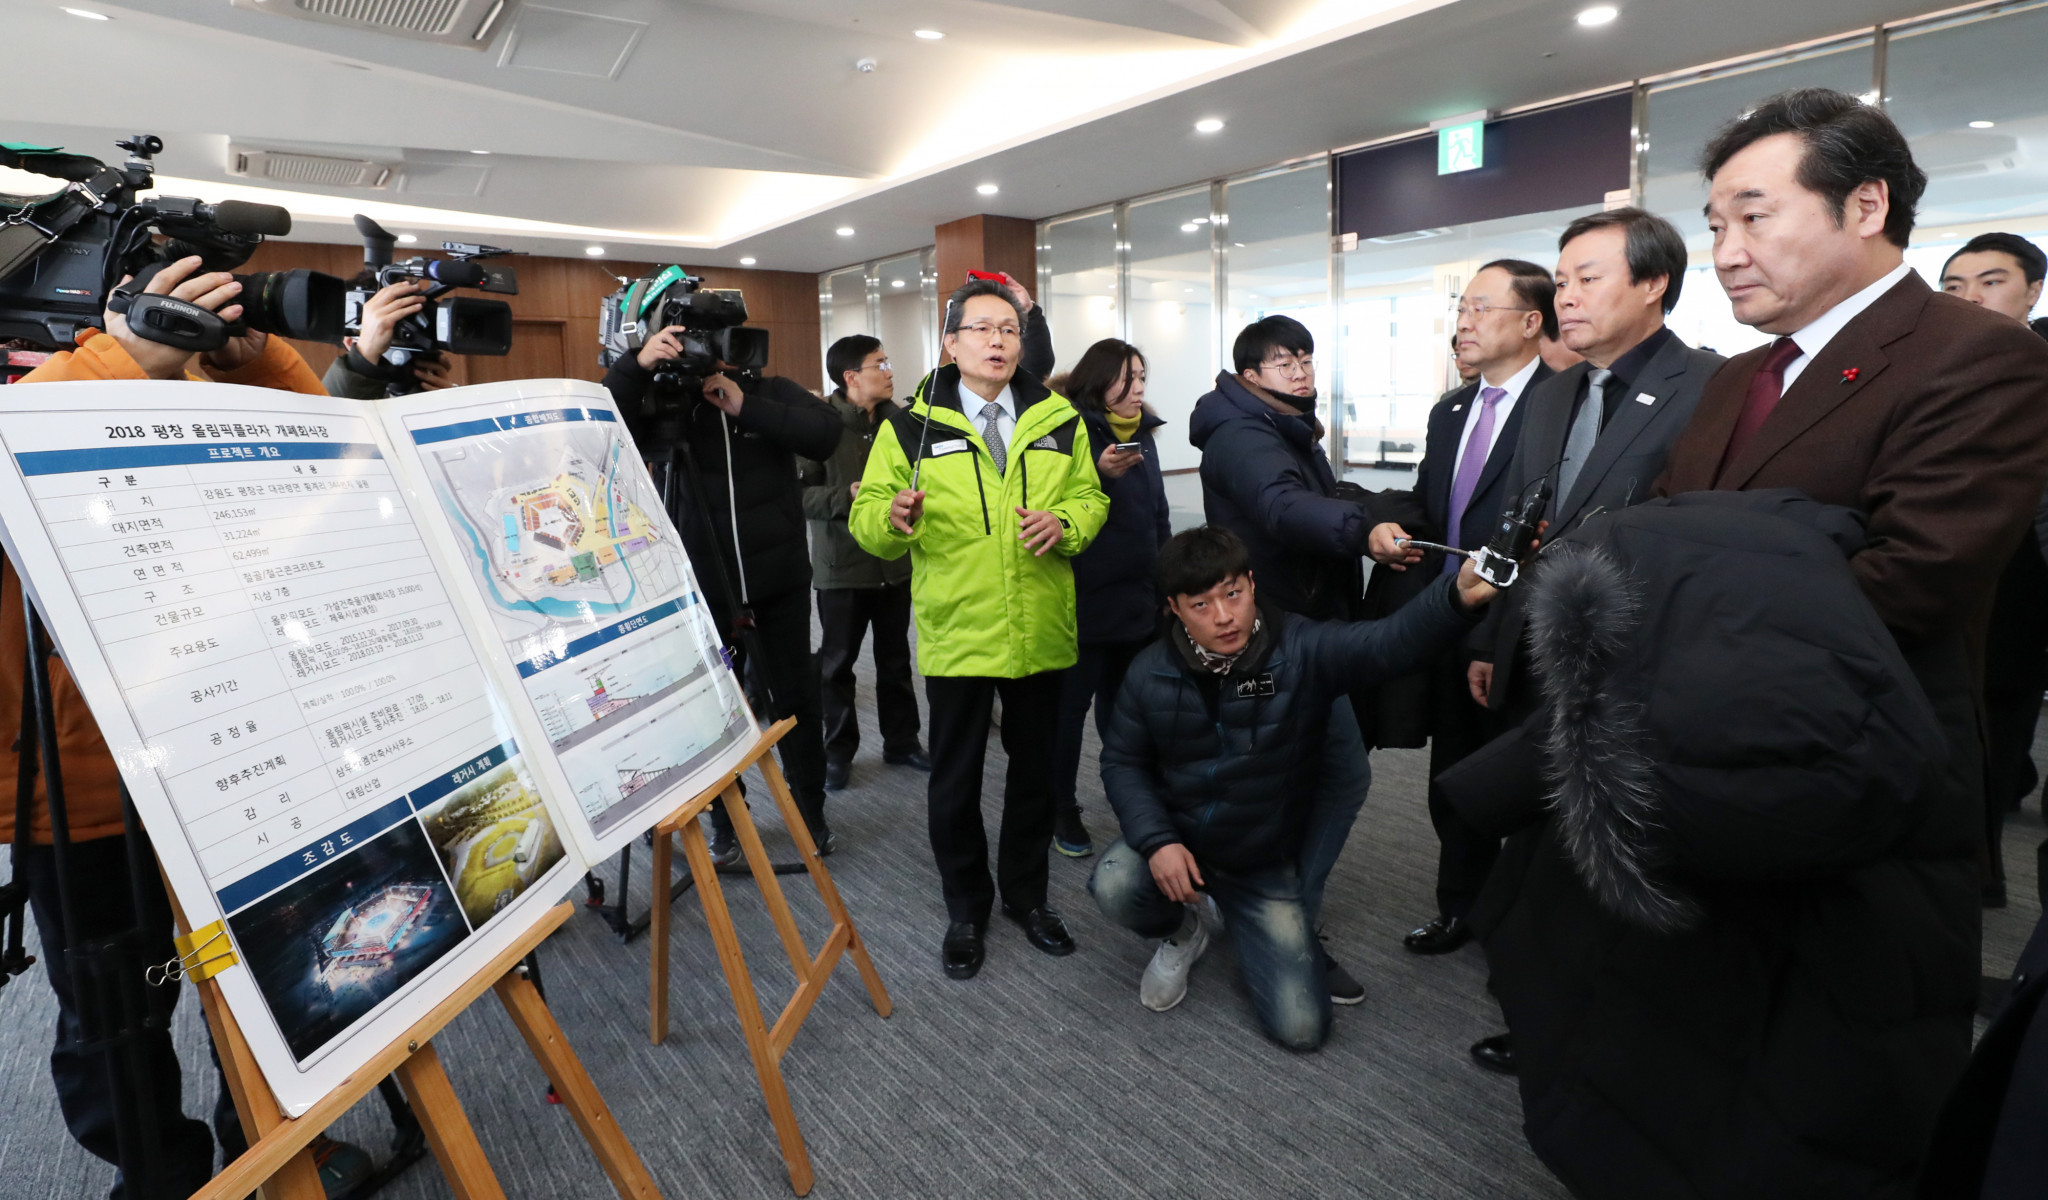 South Korean Prime Minister Lee Nak-yeon visits Pyeongchang 2018 venues